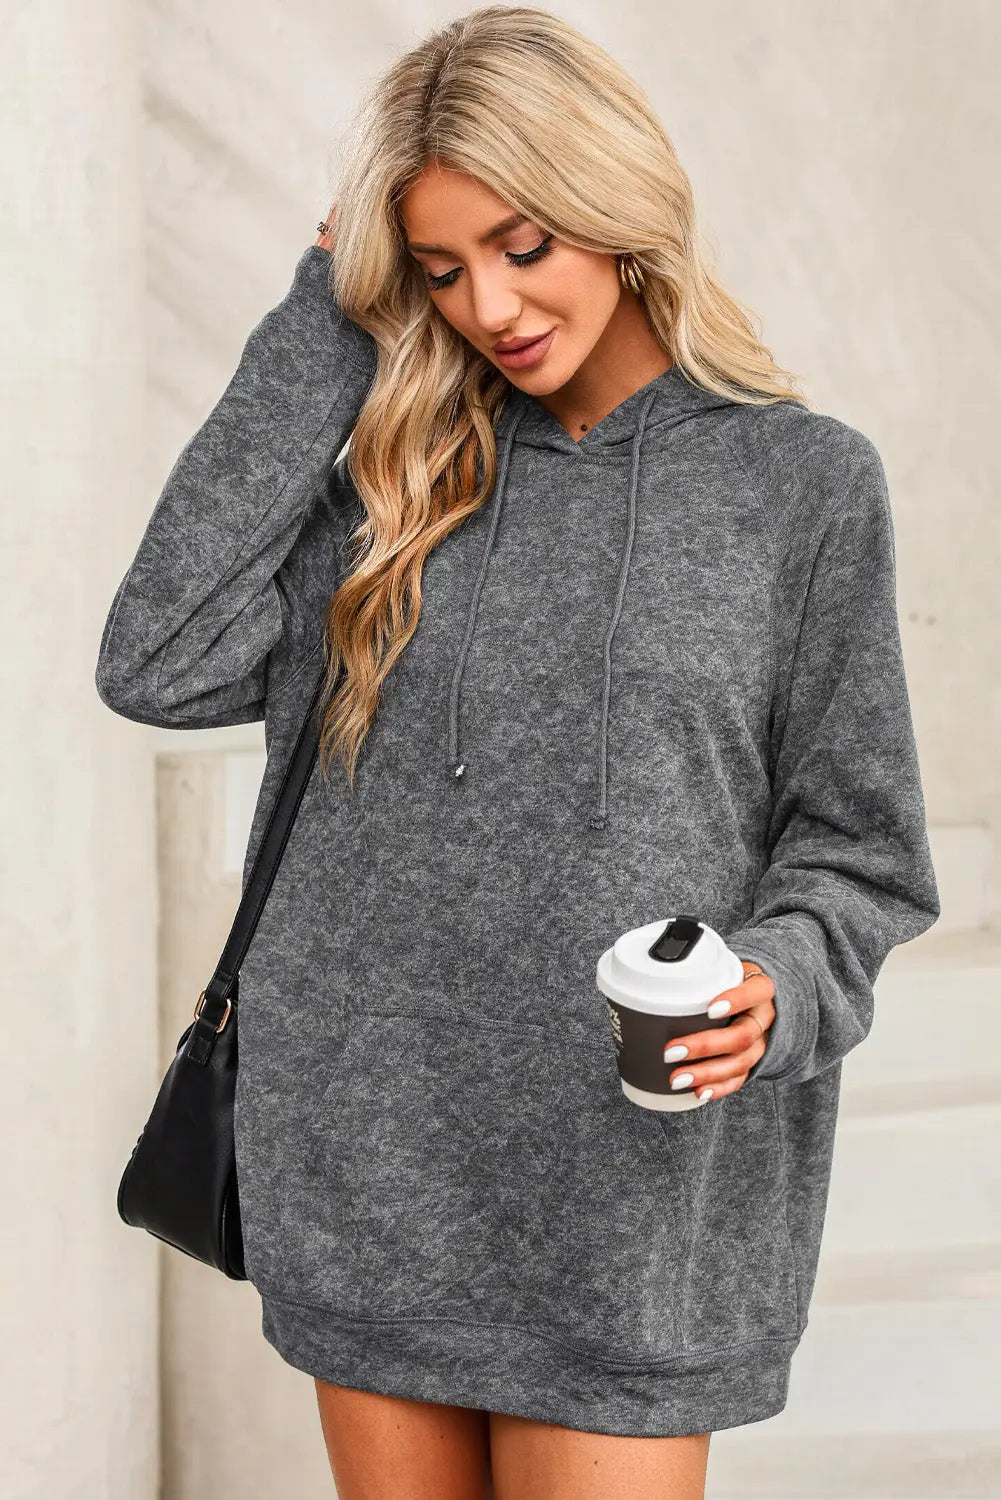 Mineral wash kangaroo pocket drawstring pullover hoodie - gray / xl / 80% polyester + 20% cotton - sweatshirts & hoodies